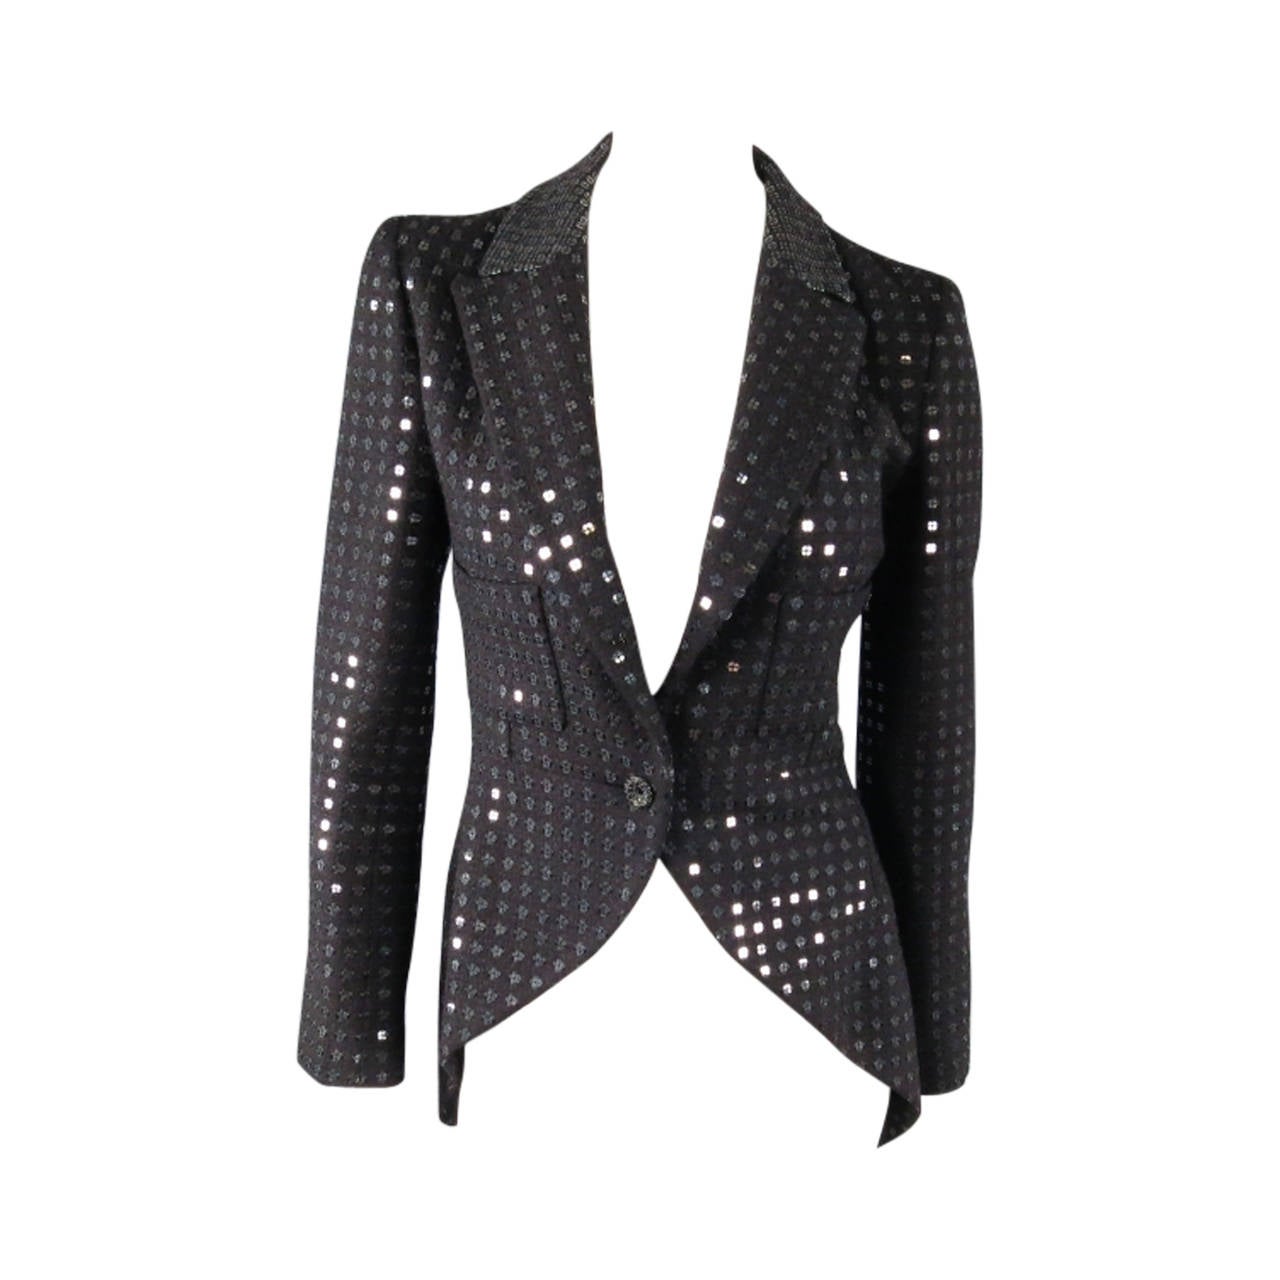 CHANEL Size 2 Black Sequin Wool Peak Lapel Tuxedo Riding Jacket at